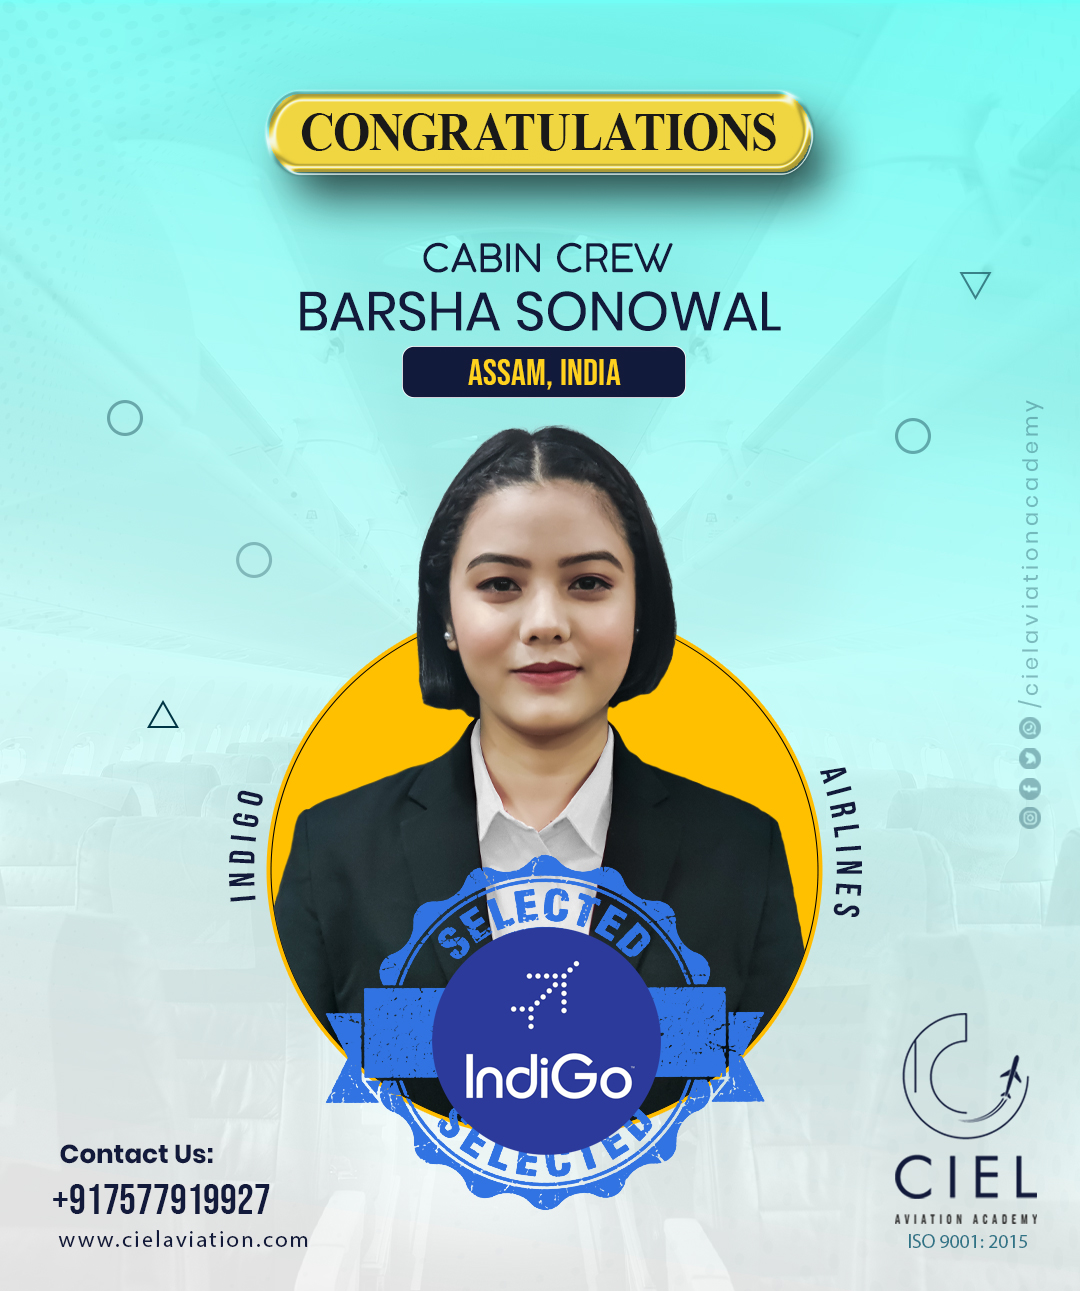 Ciel Aviation Academy - Barsha Sonowal